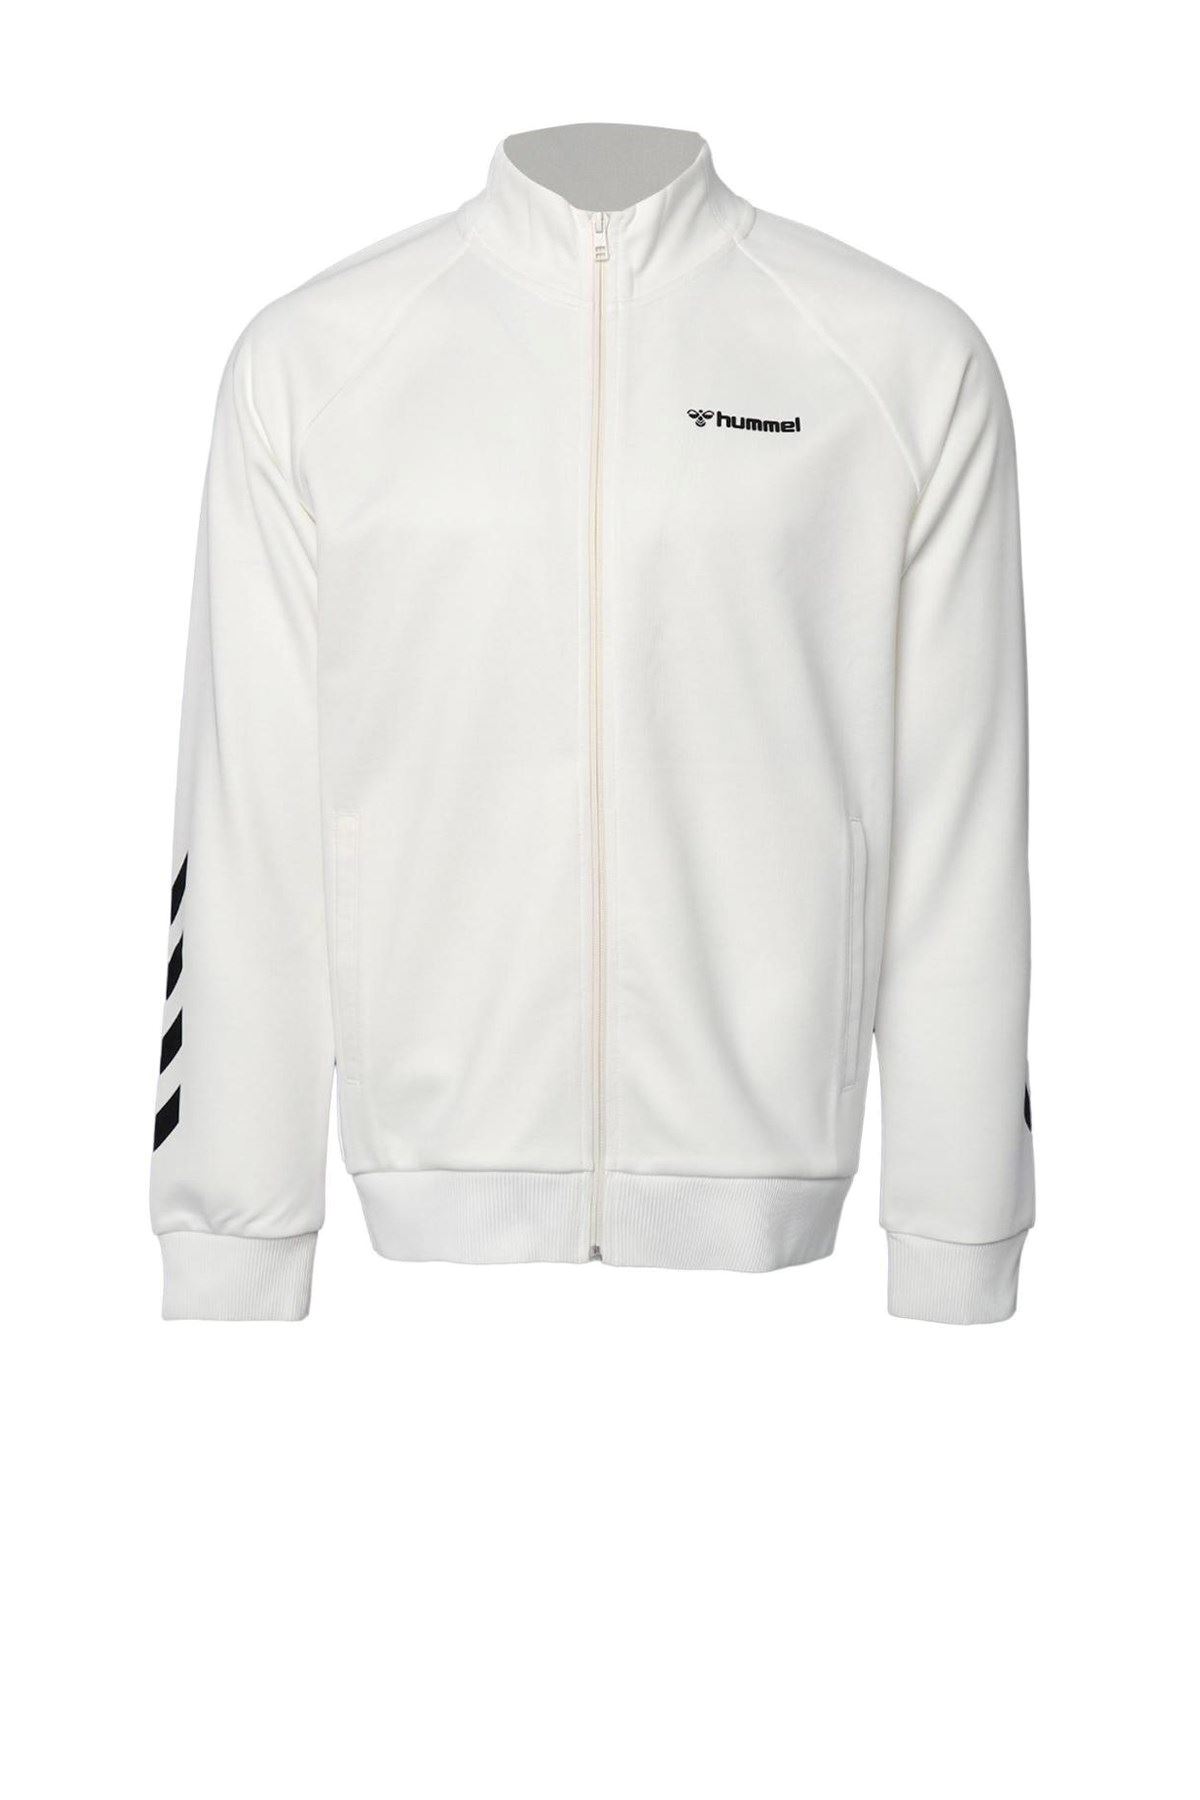 Hummel Hmlfalconzo Zıp Jacket Erkek Beyaz Sweat - 921133-9003